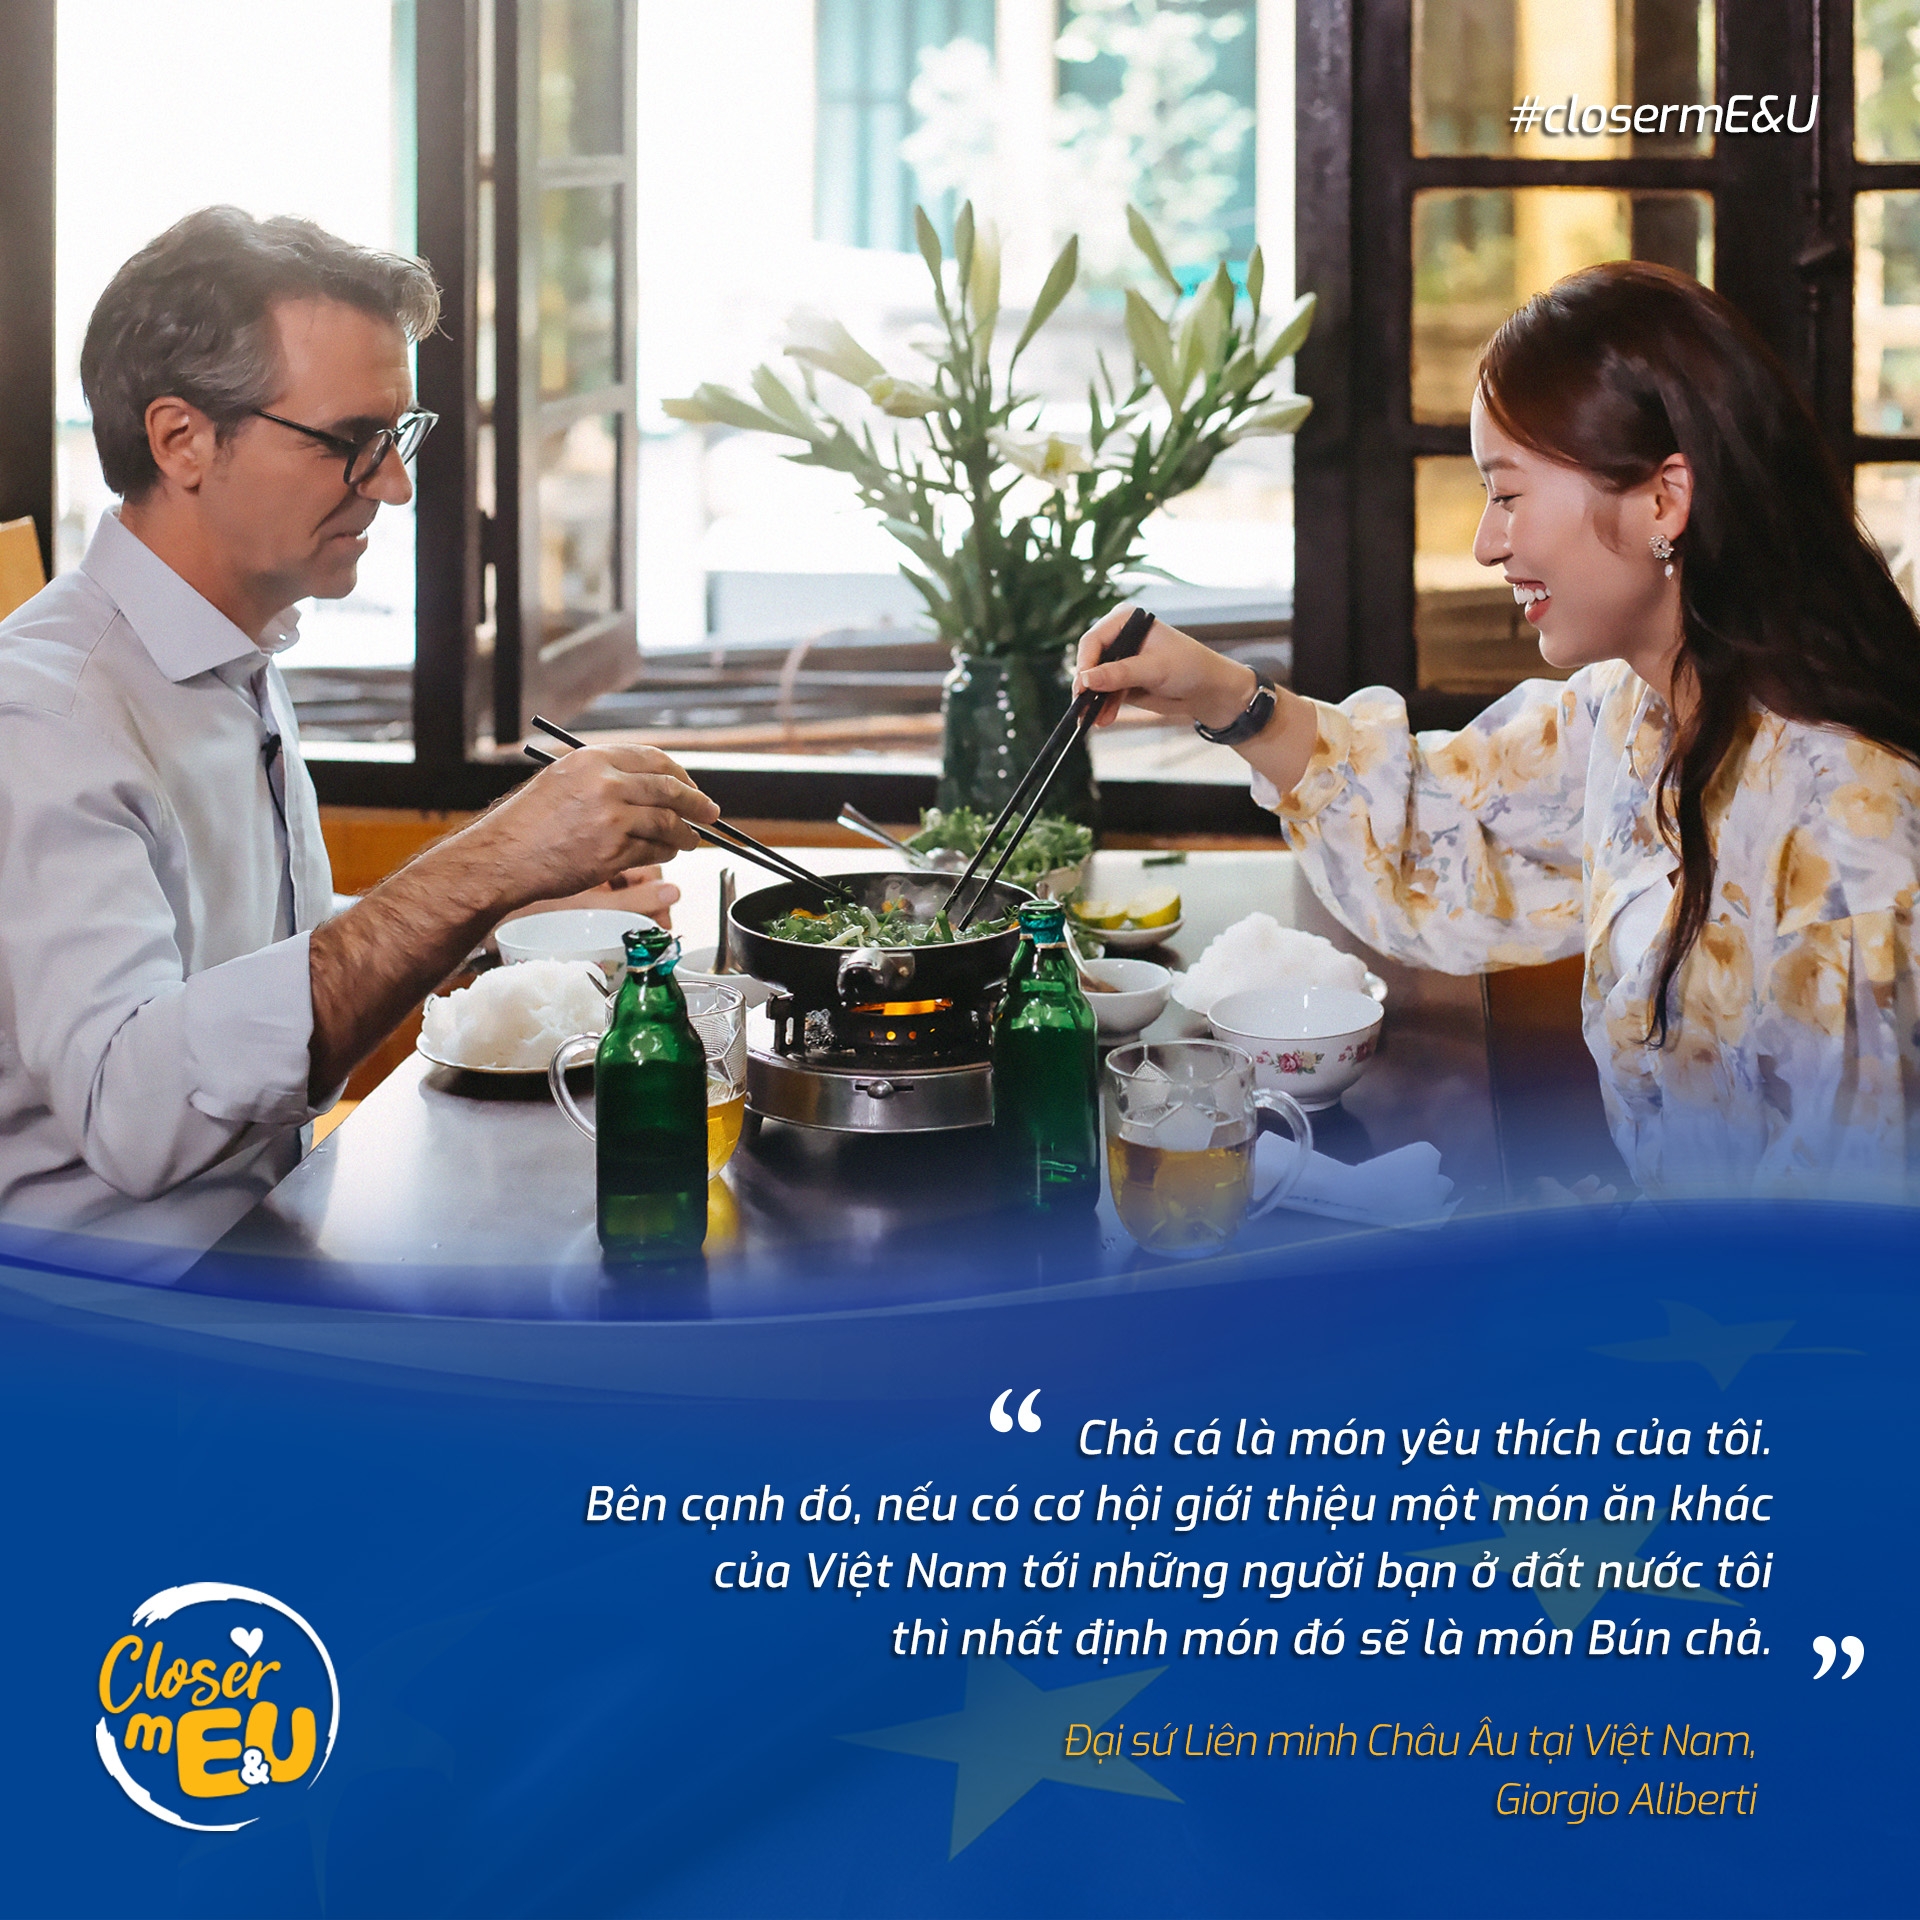 EU ambassador with love for Vietnamese cuisine